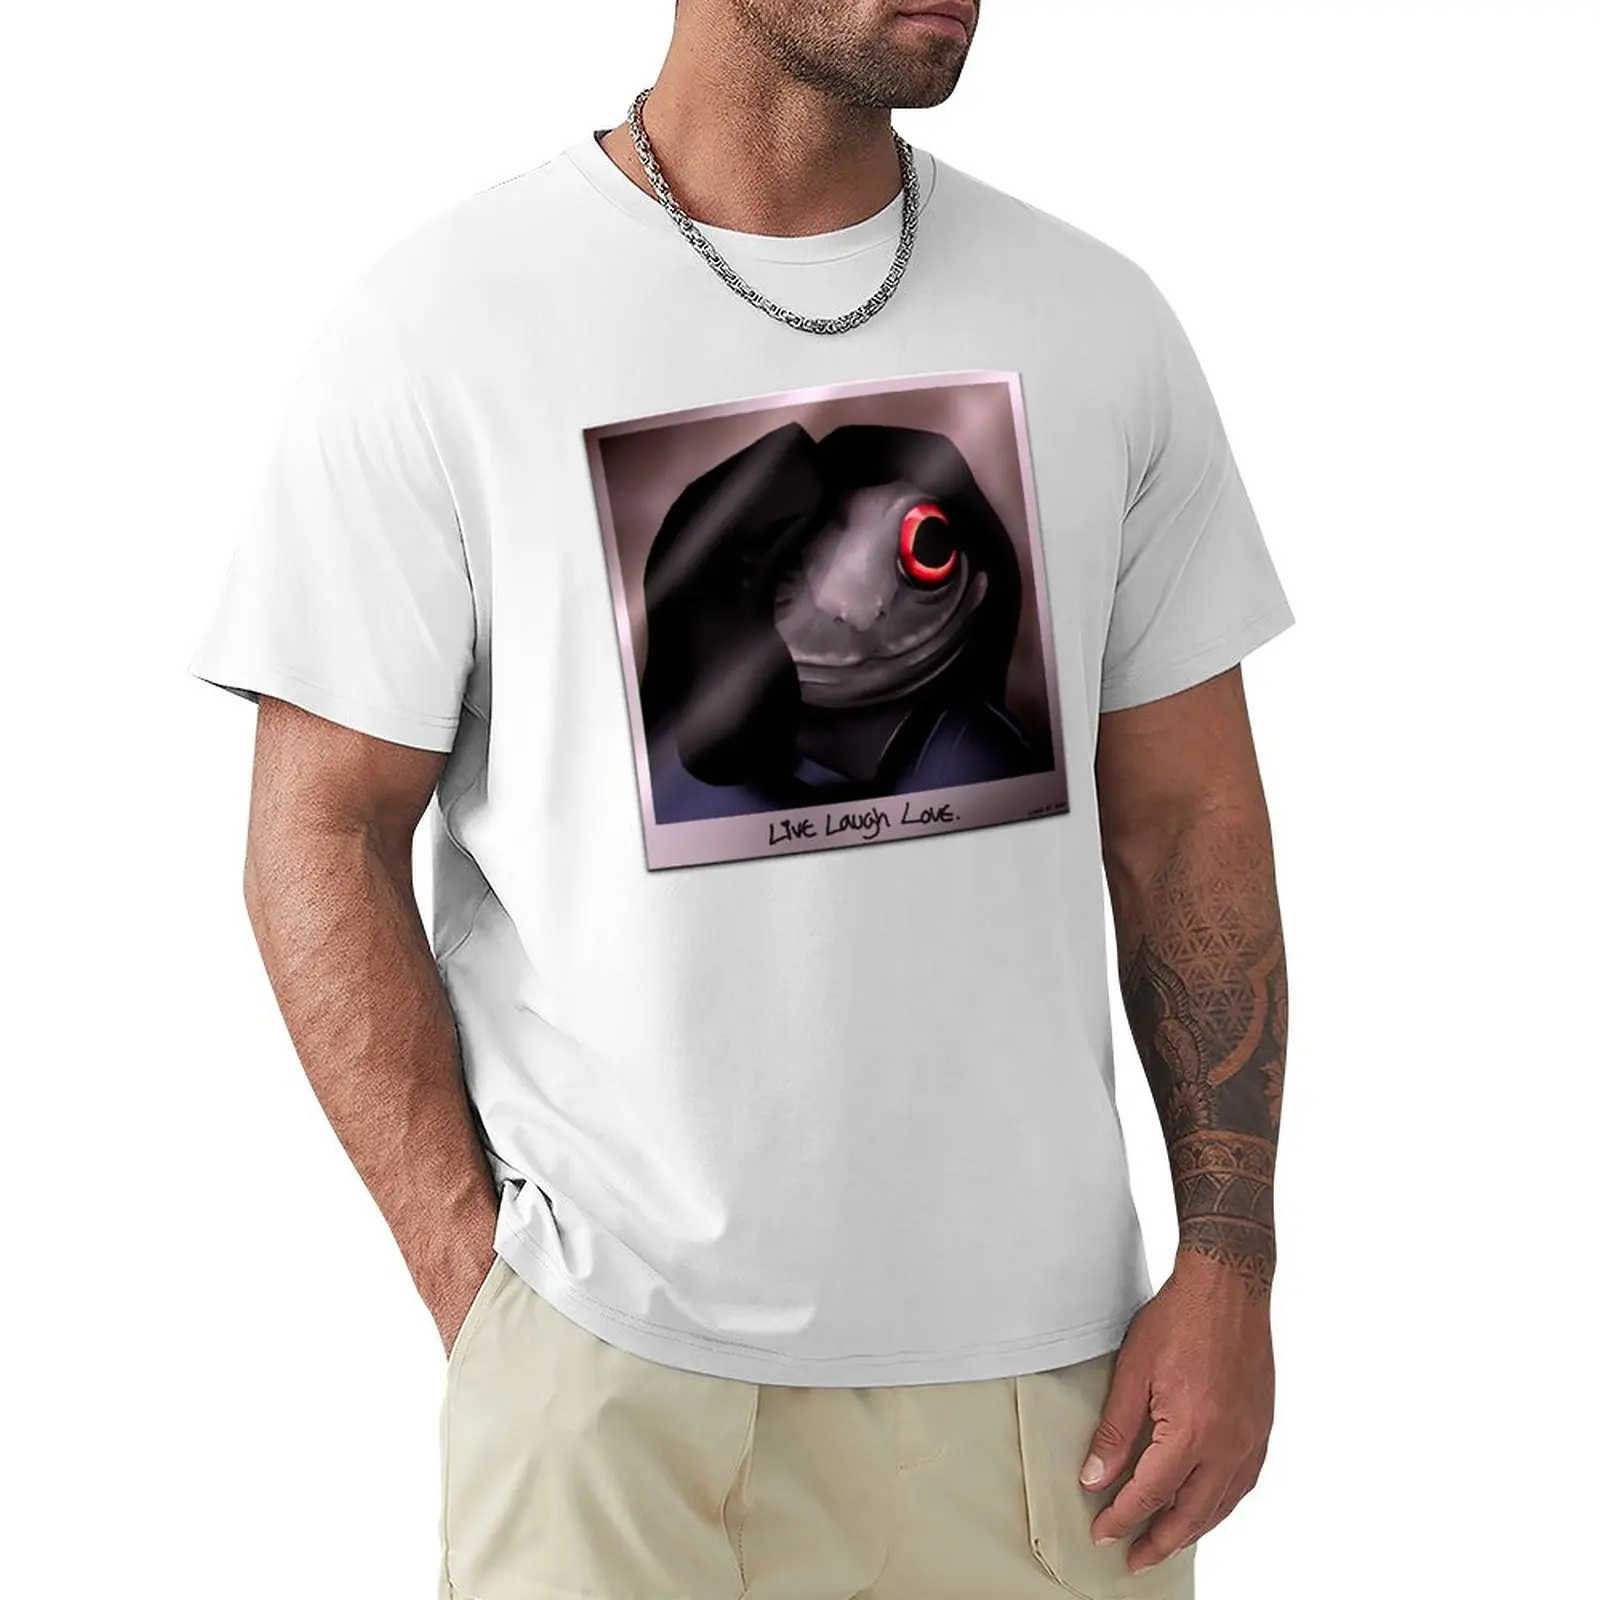 

Live Laugh Love T-Shirt quick-drying graphics plain plain white t shirts men